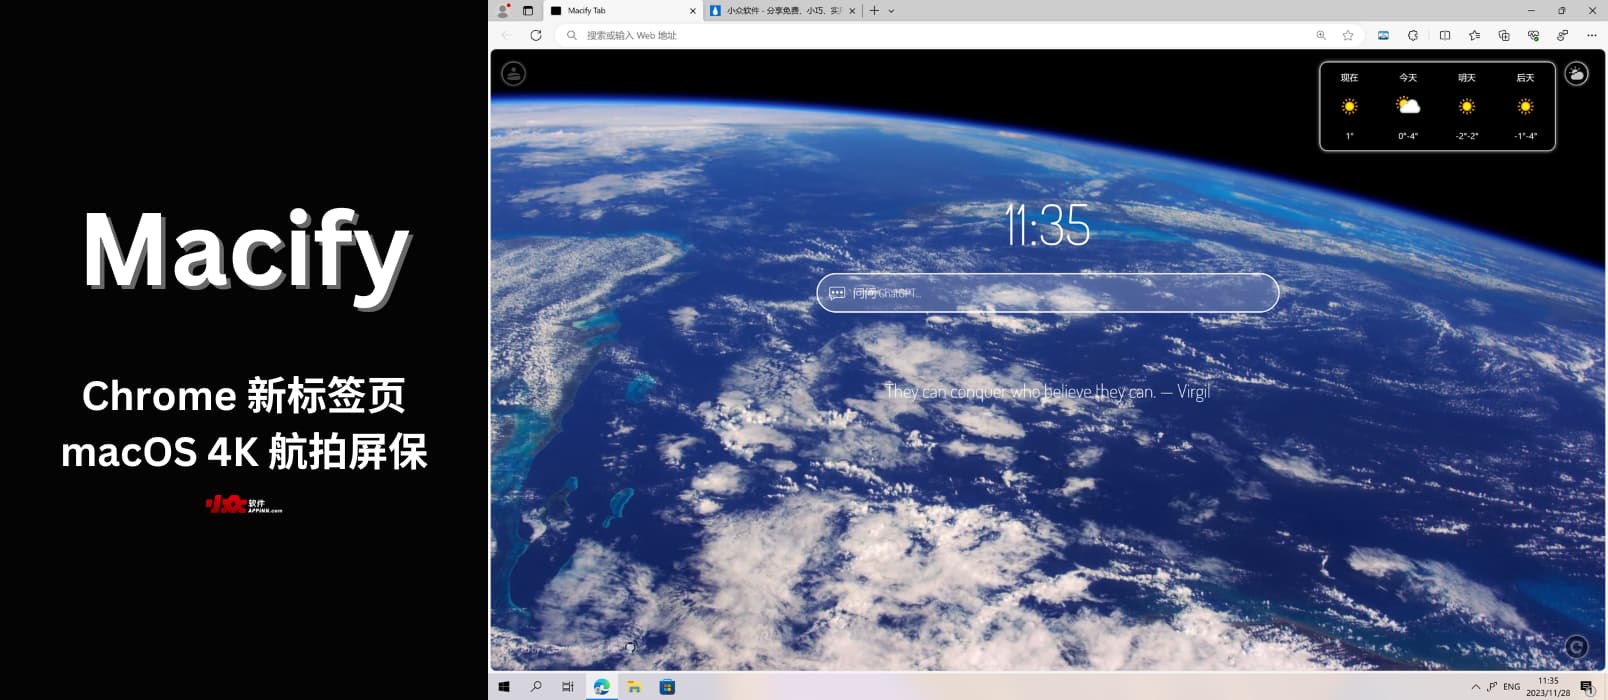 Macify – 在 Chrome 新标签页显示 macOS 原生自带 4K 航拍屏保视频